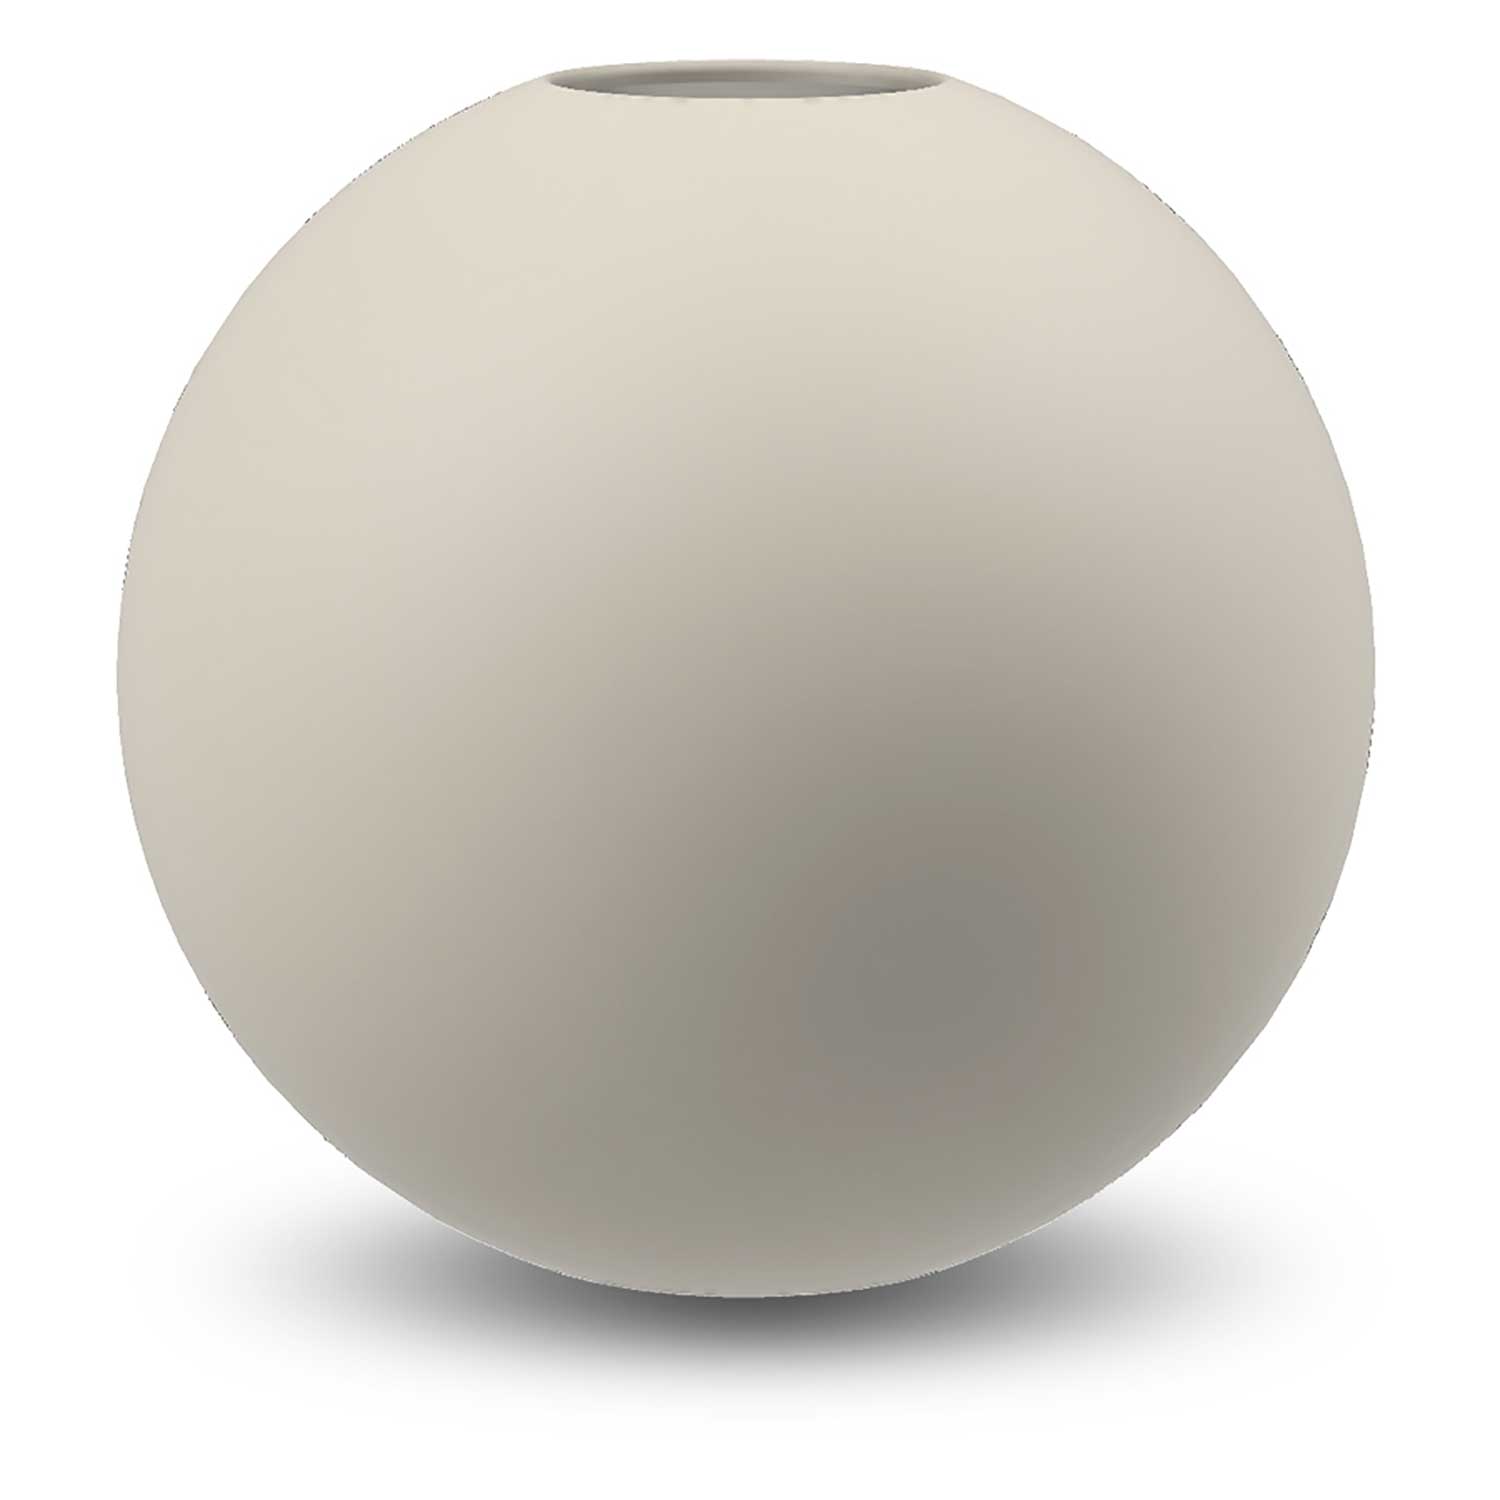 Cooee Design Vase Ball Apple Green 8cm